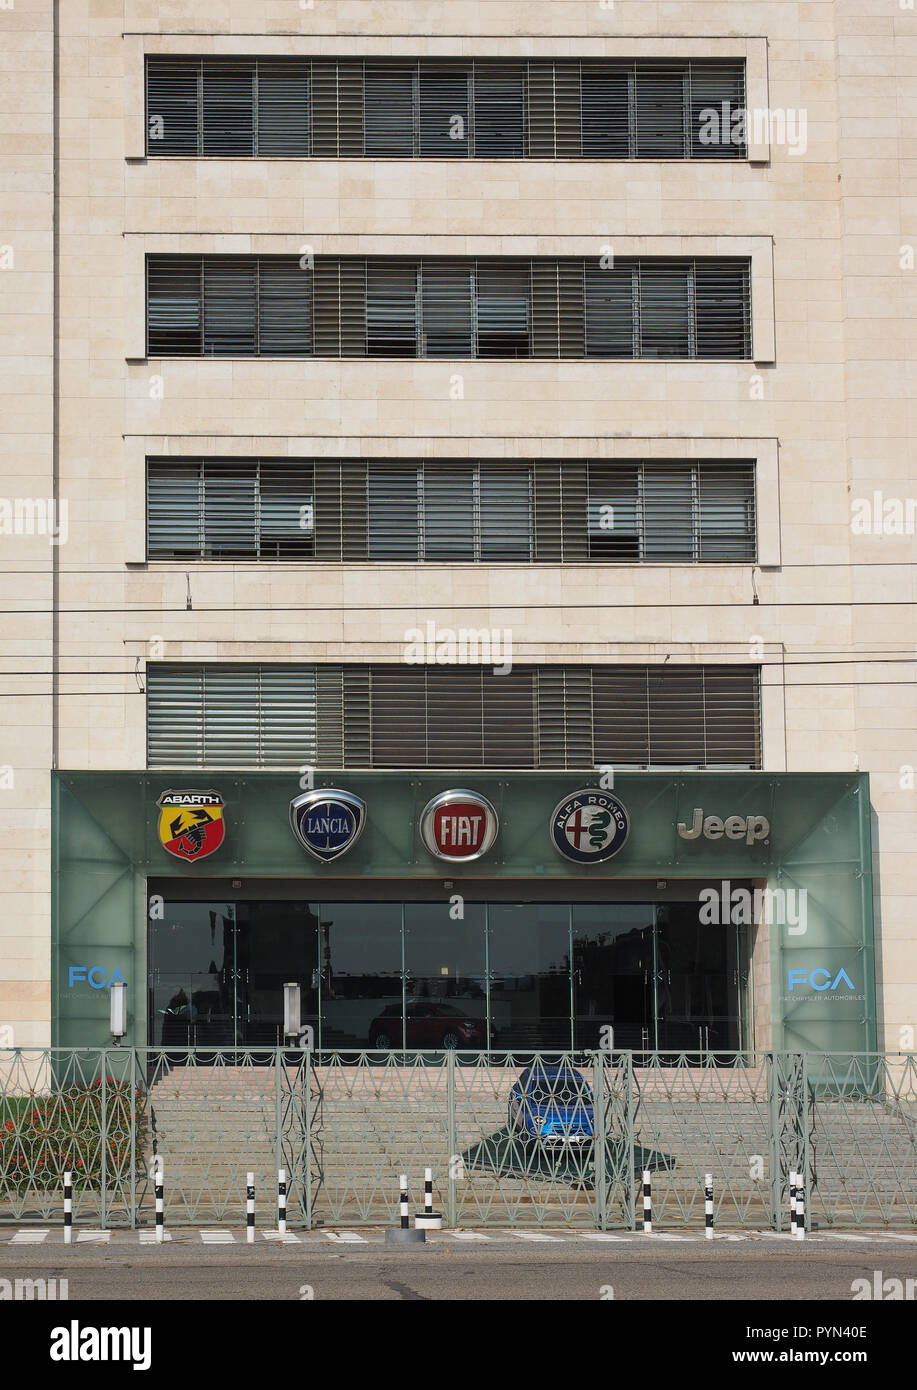 TURIN, ITALY - CIRCA SEPTEMBER 2018: Fiat Chrysler Automobiles (FCA) Mirafiori car factory for Fiat, Lancia, Alfa Romeo, Jeep and Abarth brands Stock Photo